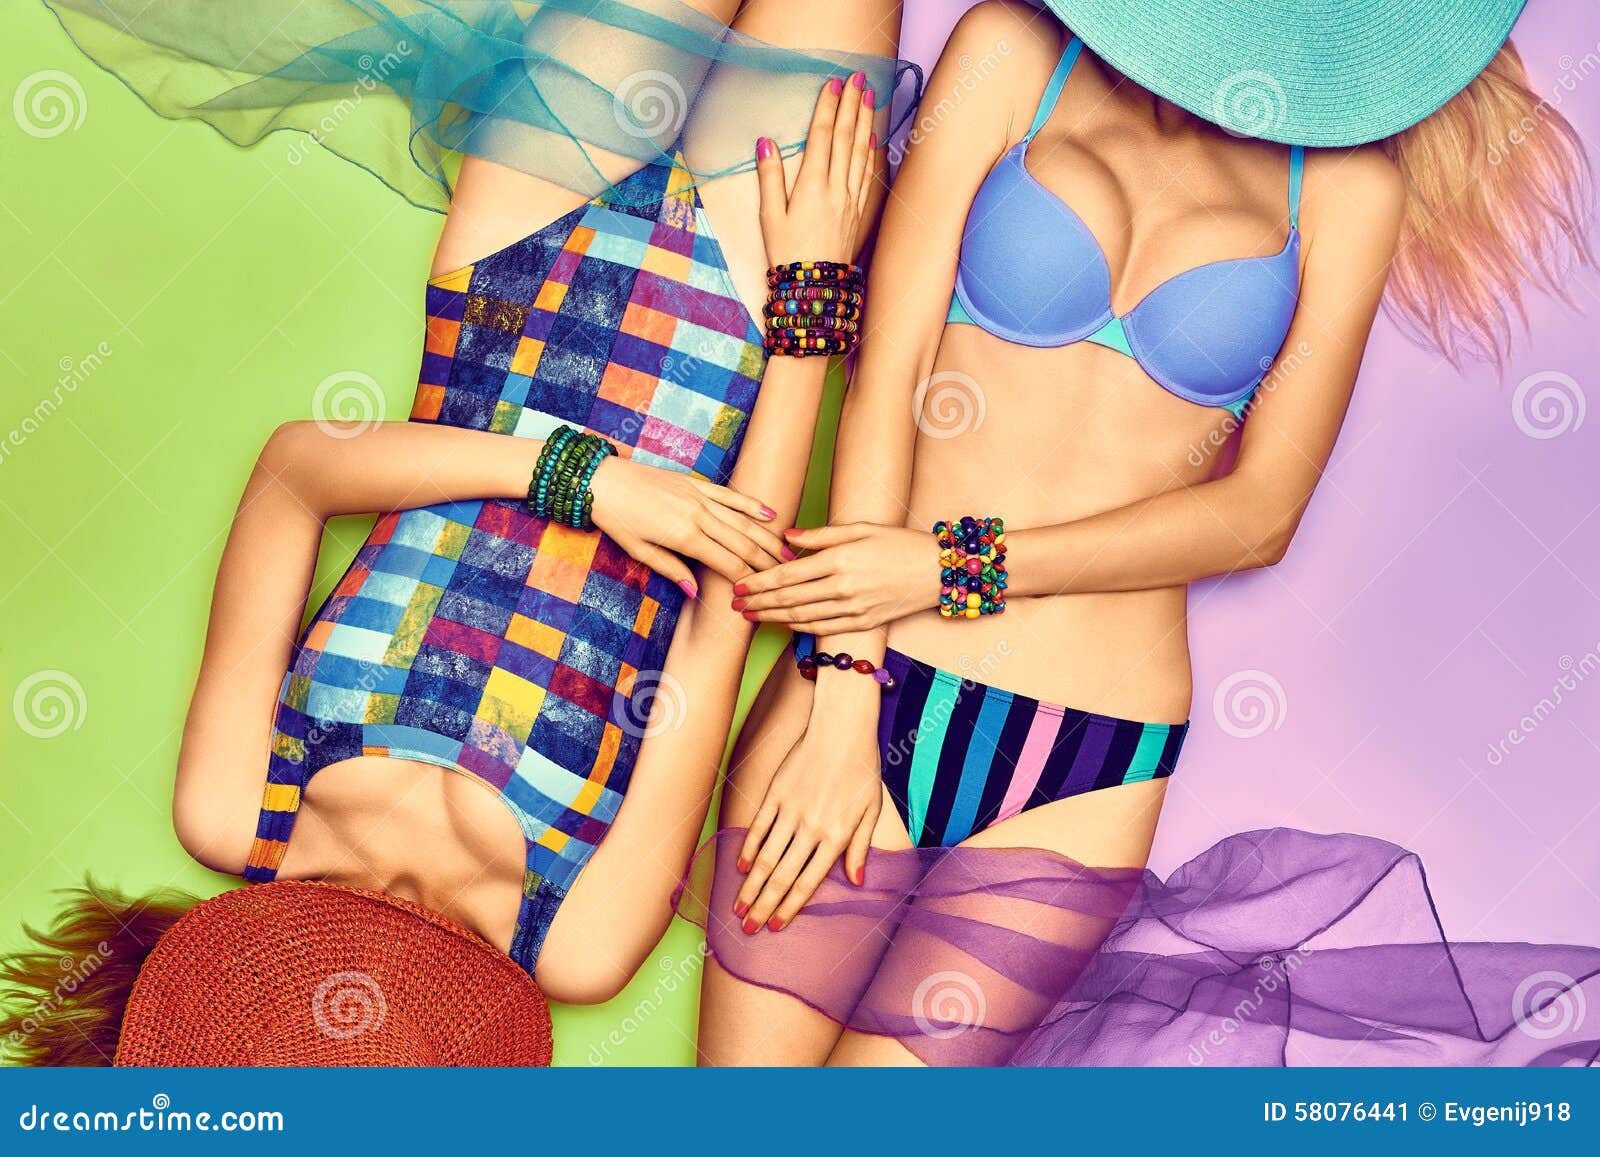 Beauty Woman Body in Fashion Swimsuit, Lesbians Stock Image